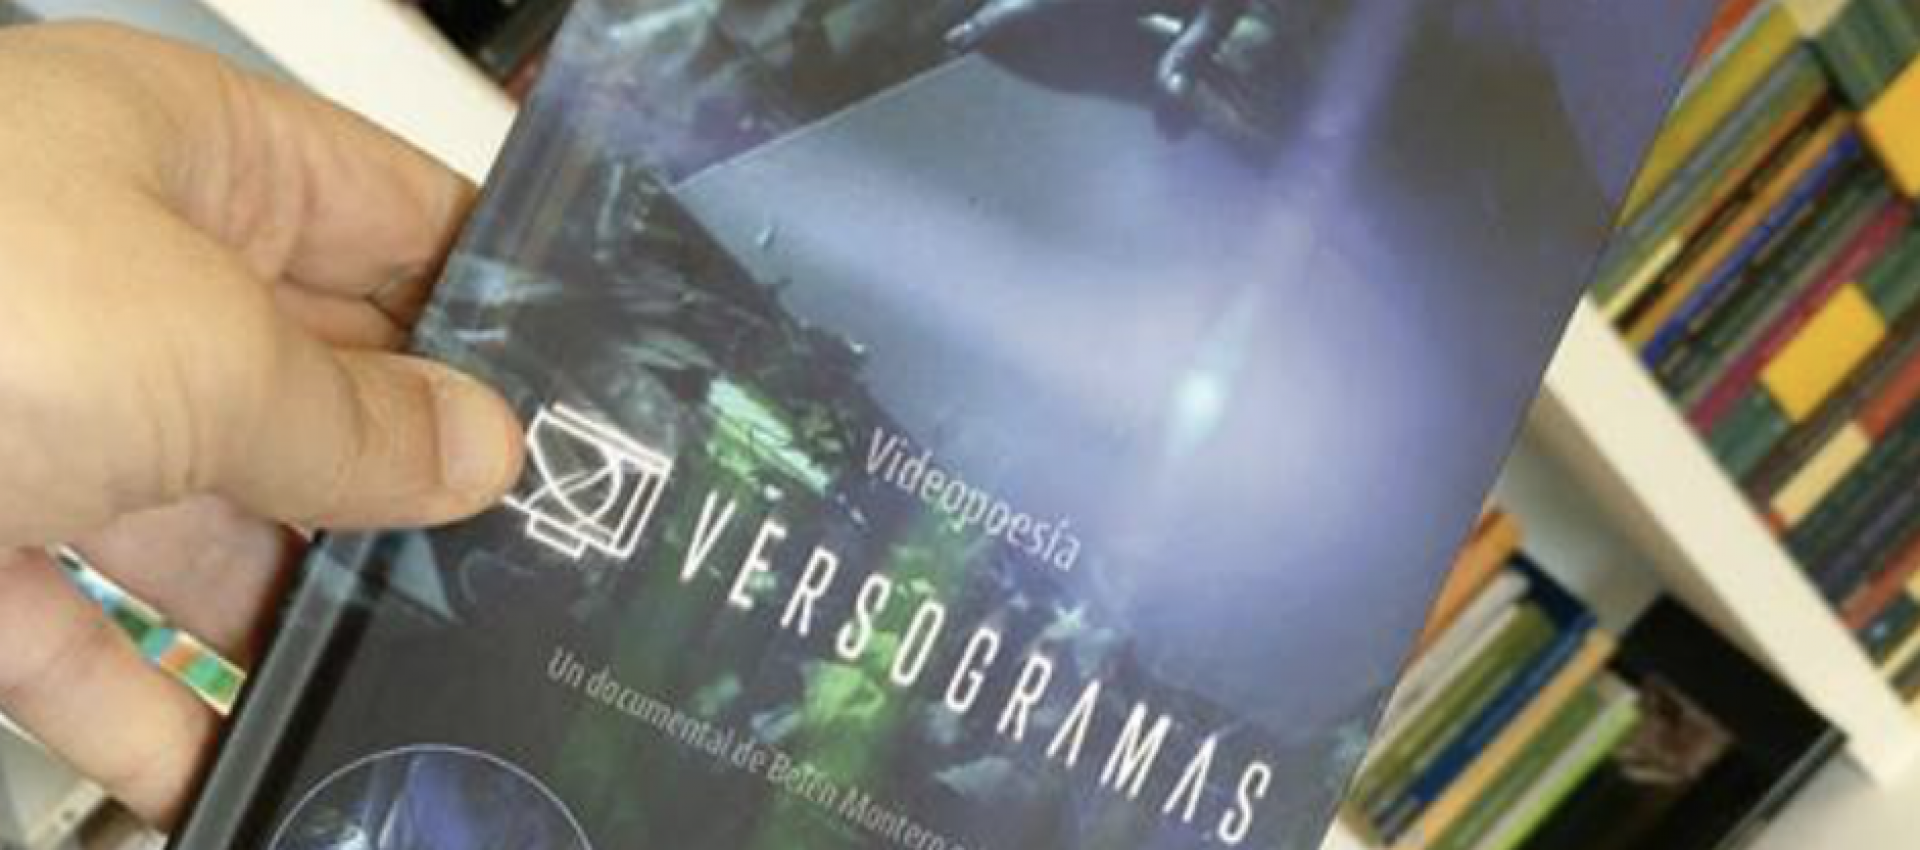 BookDVD Versogramas (Galaxia publishing house), released